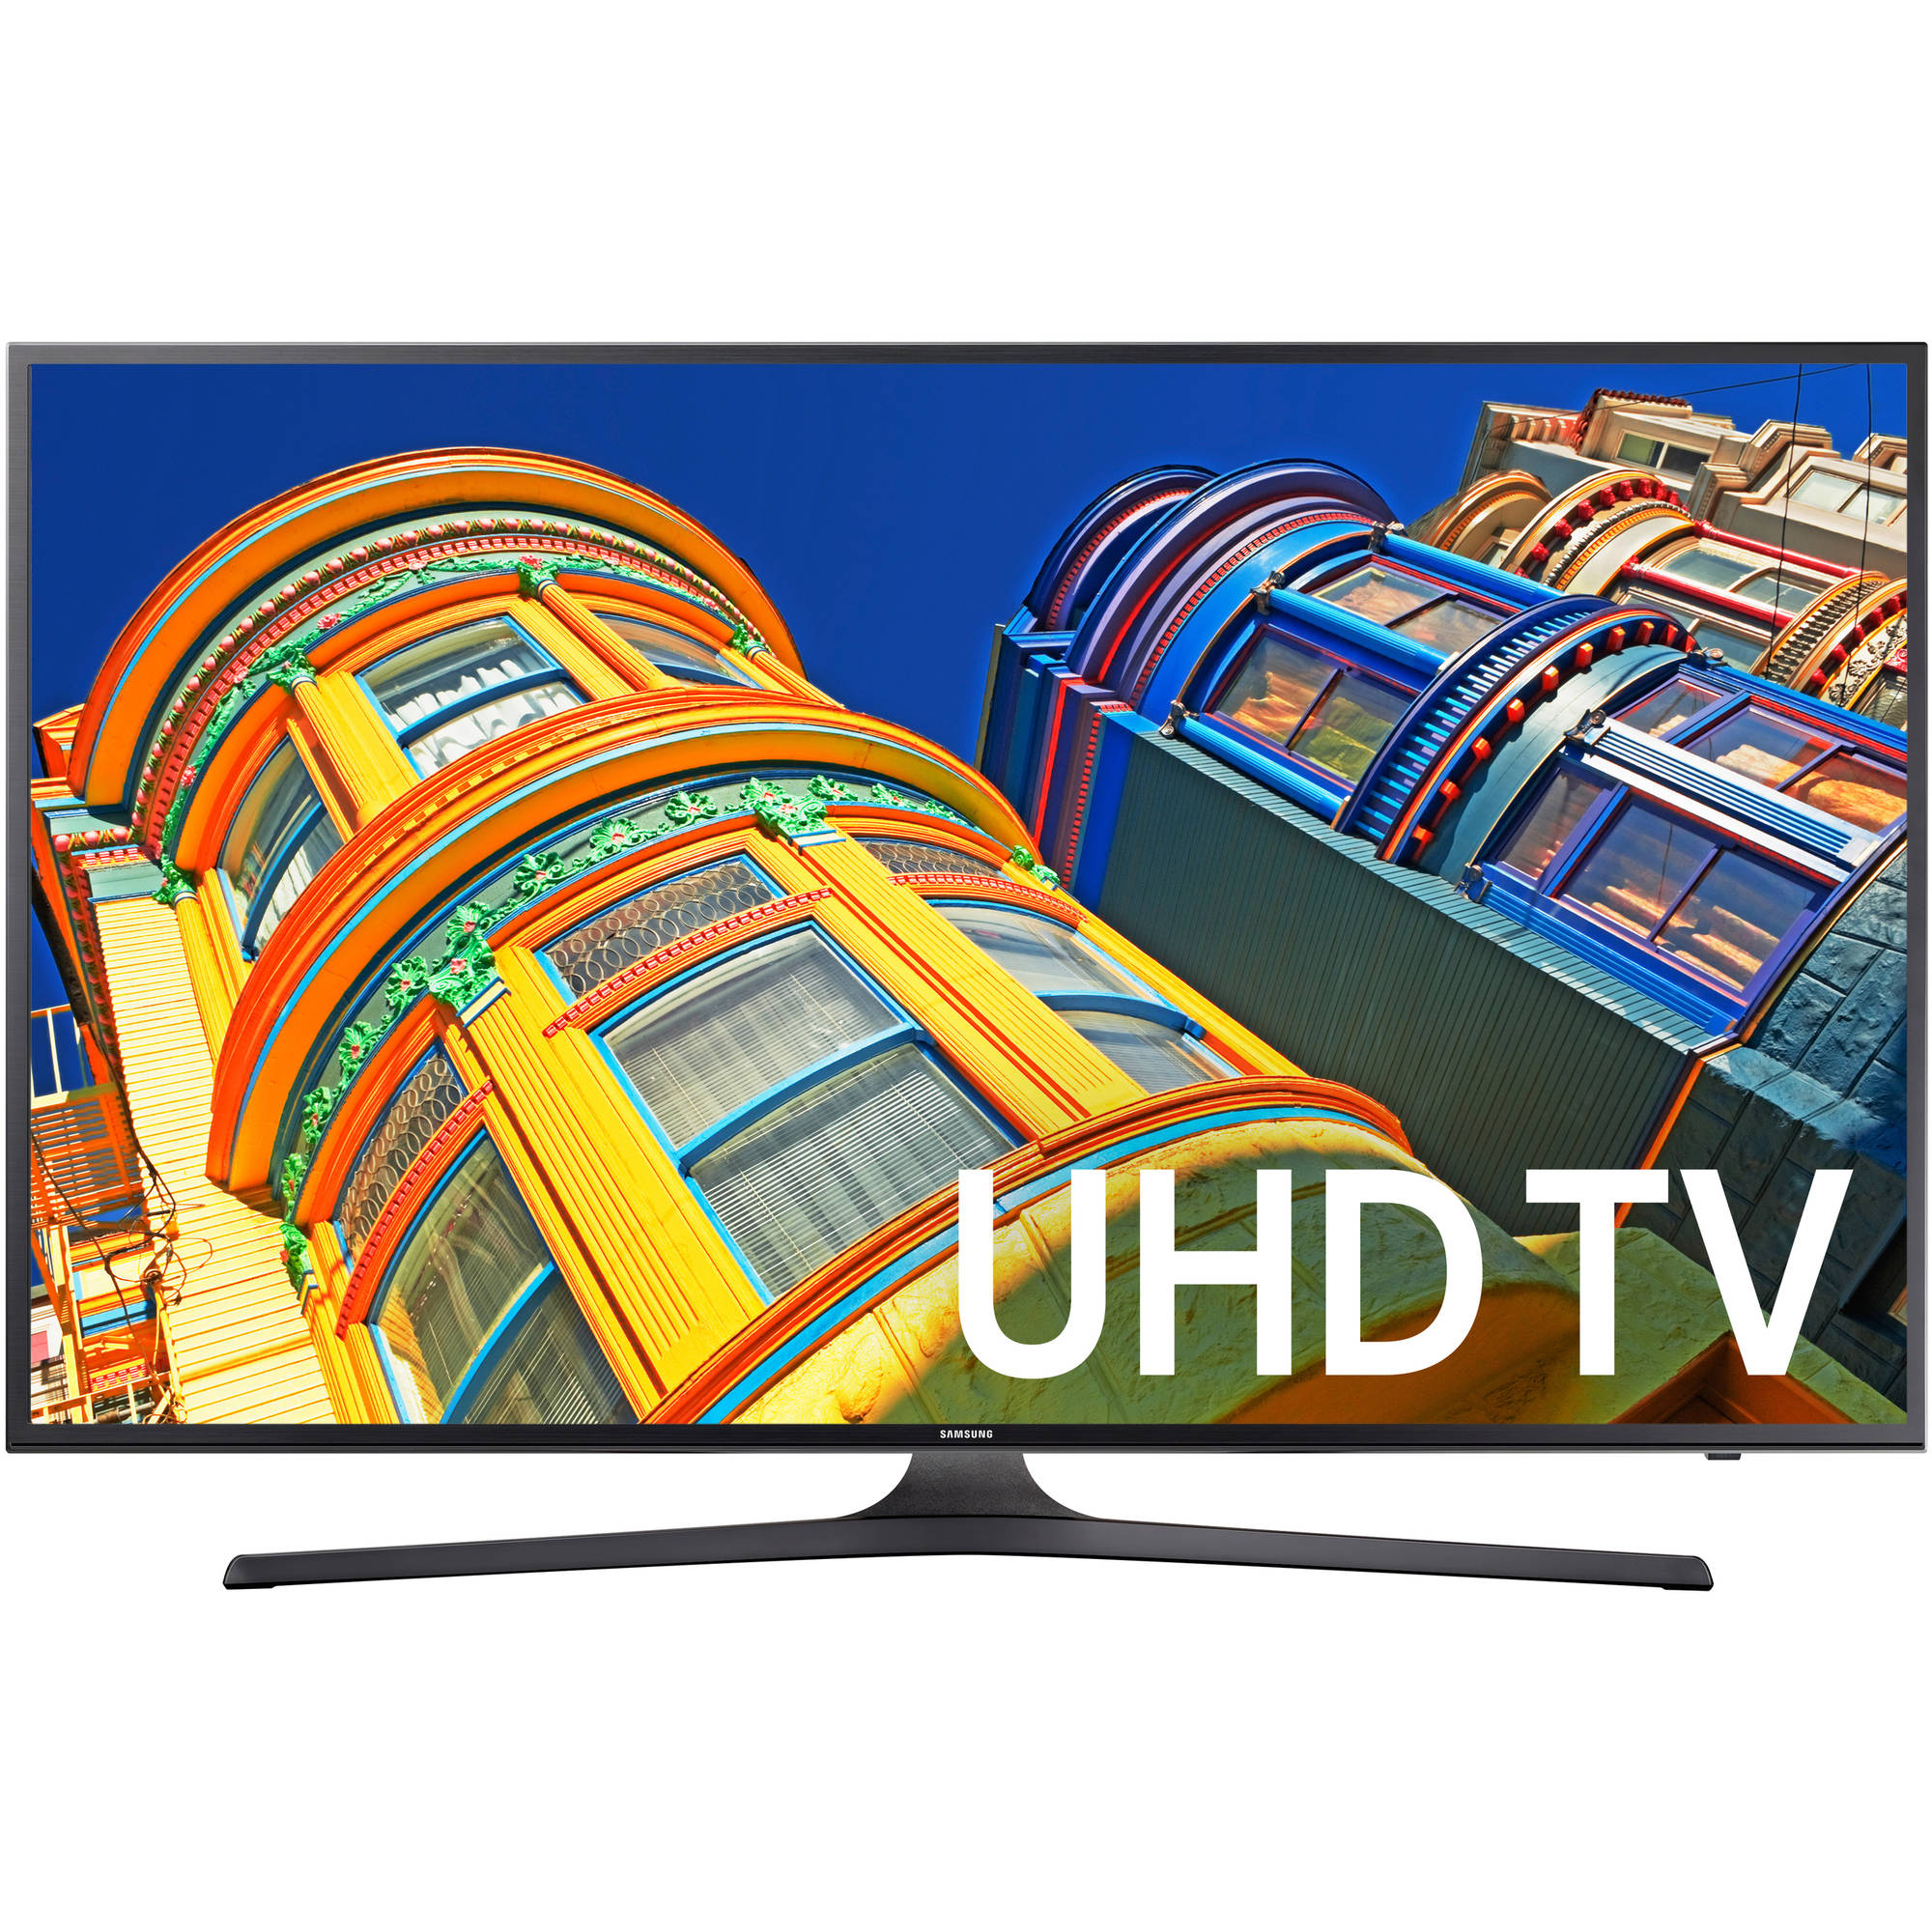 Samsung UN60KU6300F - 60" Diagonal Class 6 Series LED-backlit LCD TV - Smart TV - 4K UHD (2160p) 3840 x 2160 - HDR - direct-lit LED - dark titan - image 1 of 6